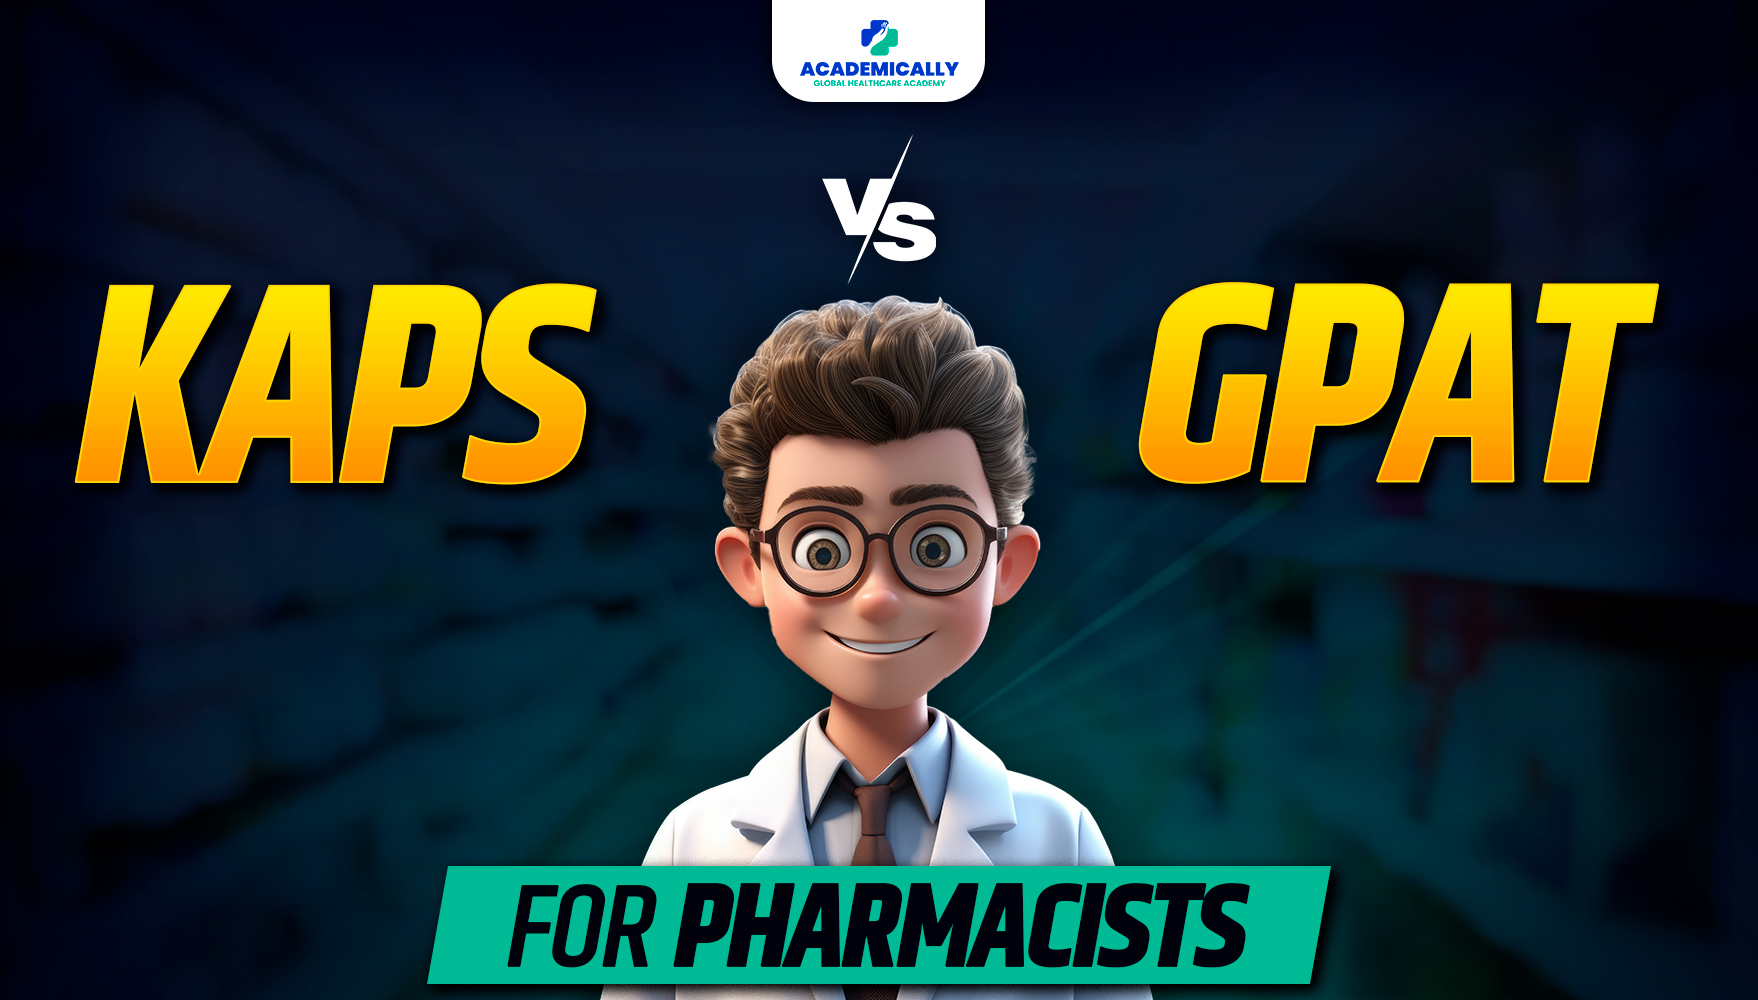 GPAT VS KAPS for Pharmacists